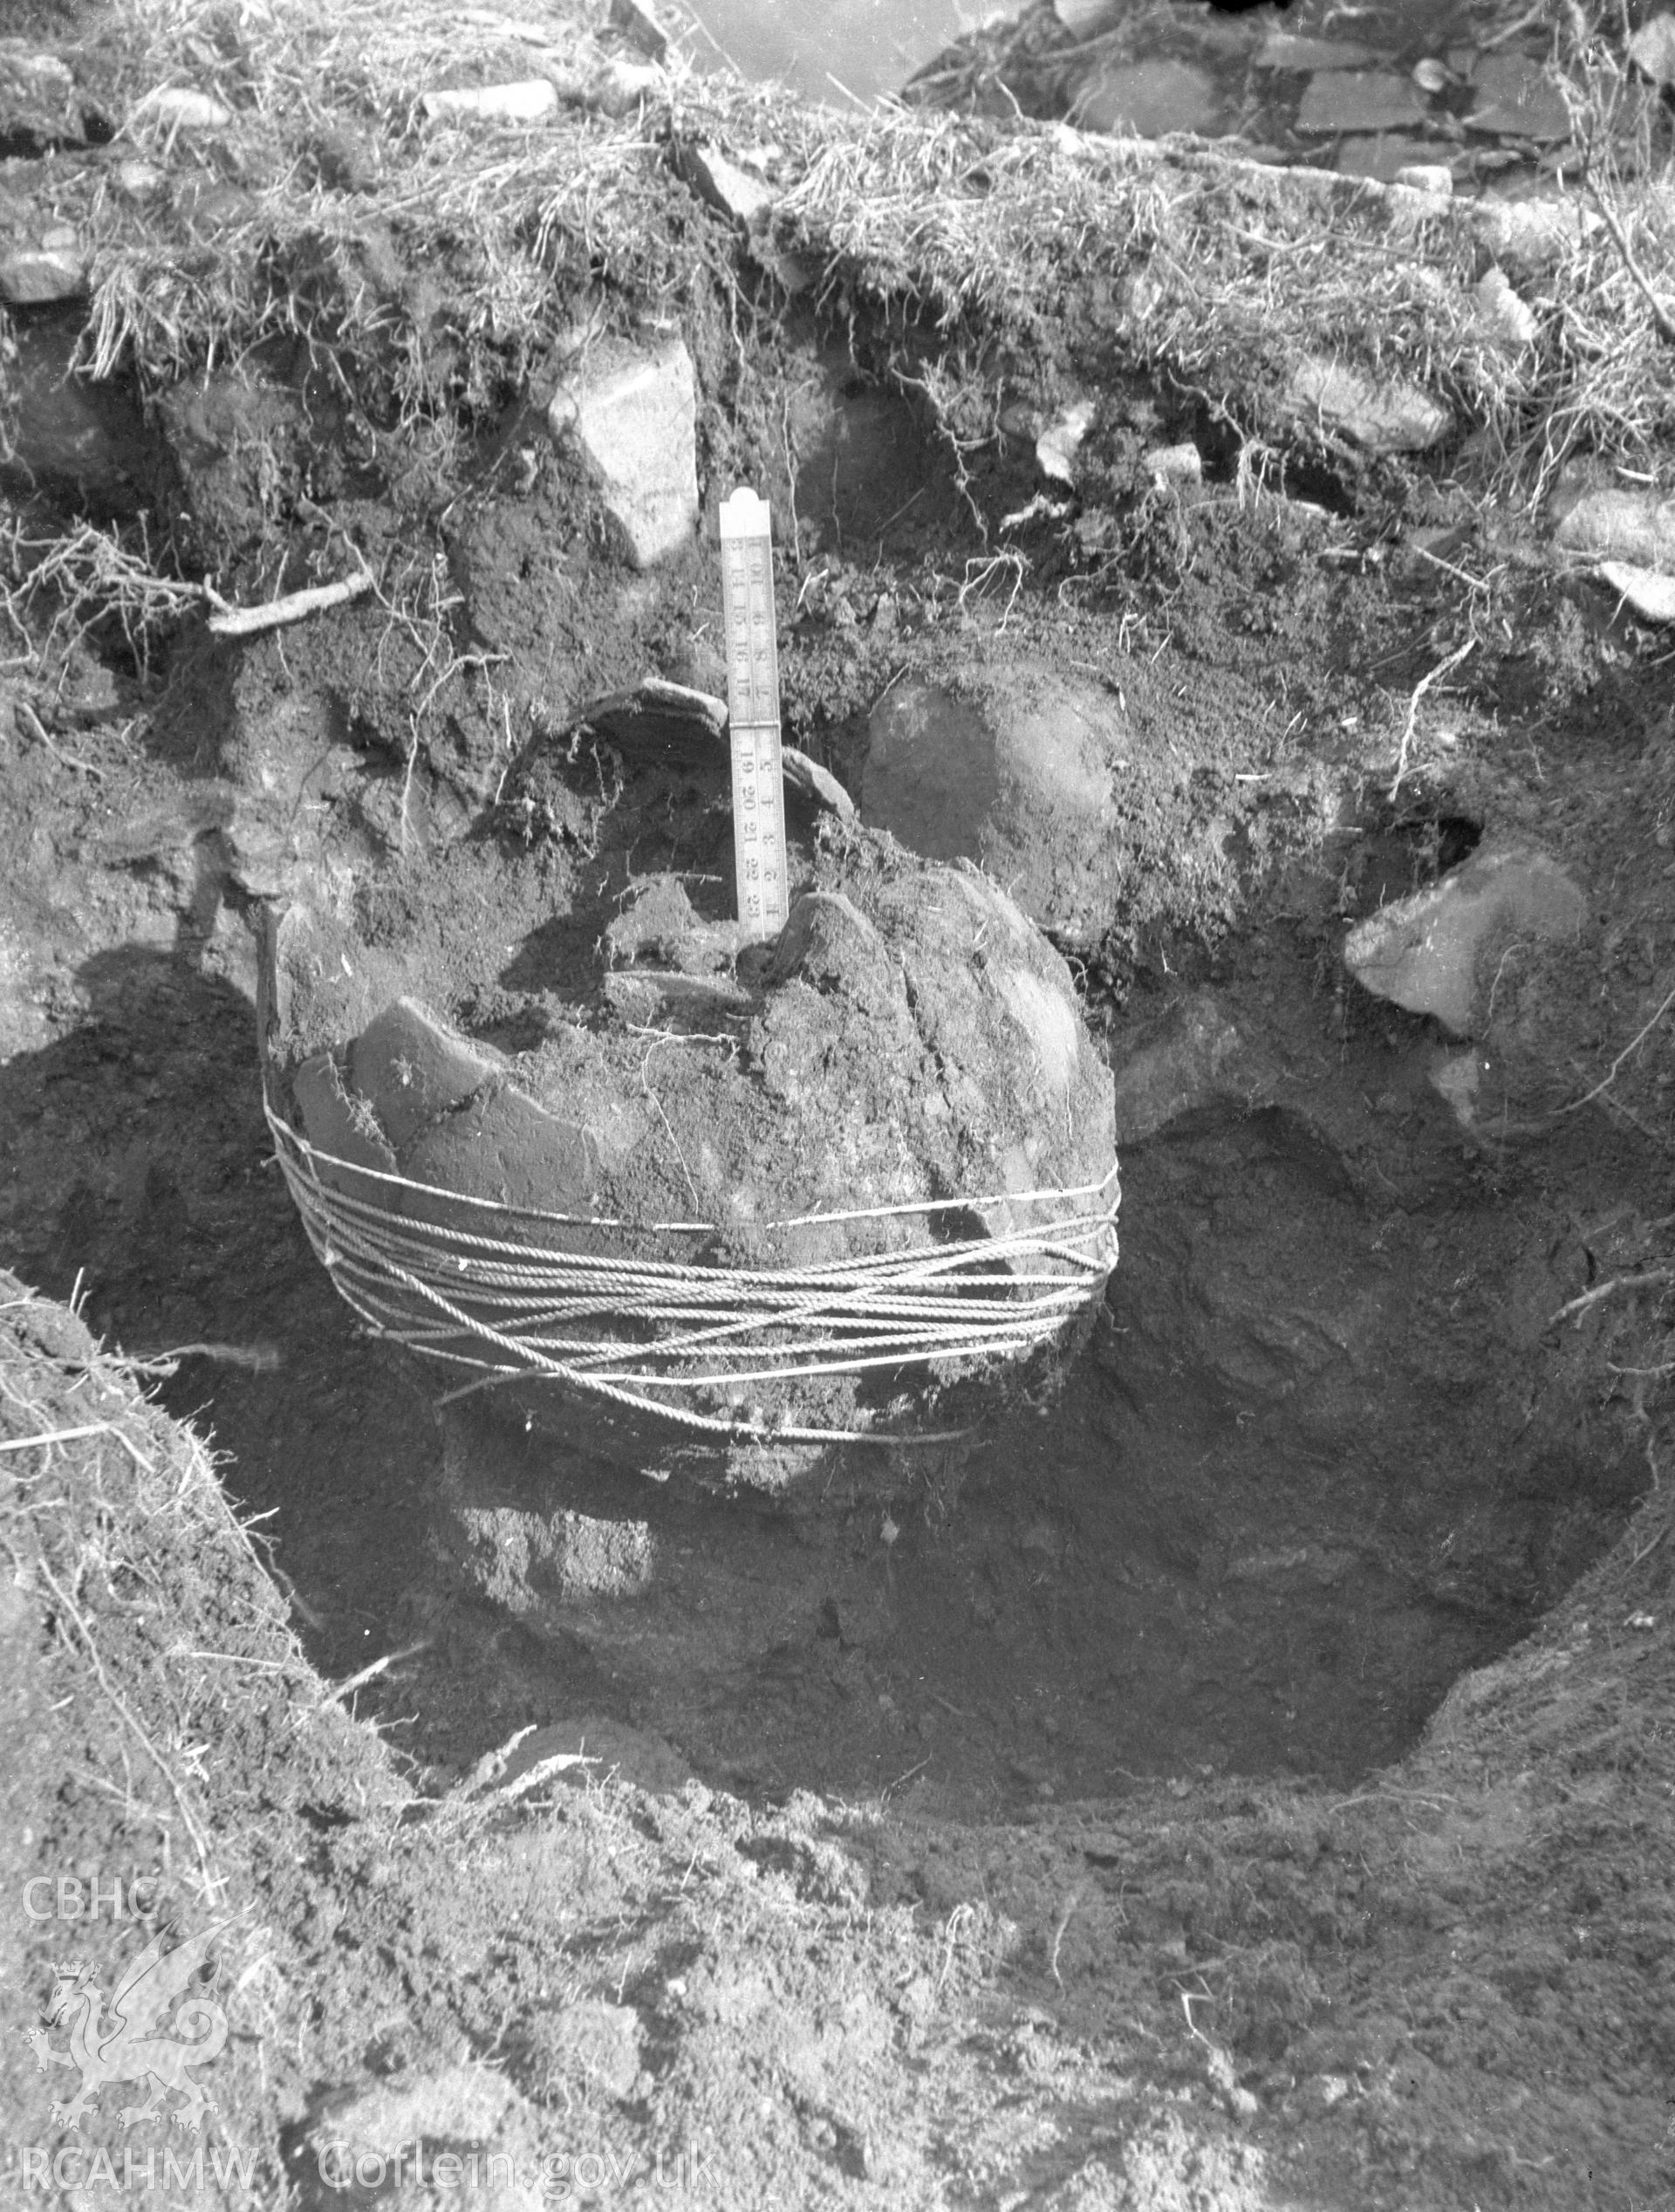 Digital copy of a nitrate negative showing Bryn-y-Gefeiliau Roman site. Reverse of black and white  photograph reads: 'Caernarfon / Capel Curig / Bryn y Gefeilliau.' From the Cadw Monuments in Care Collection.